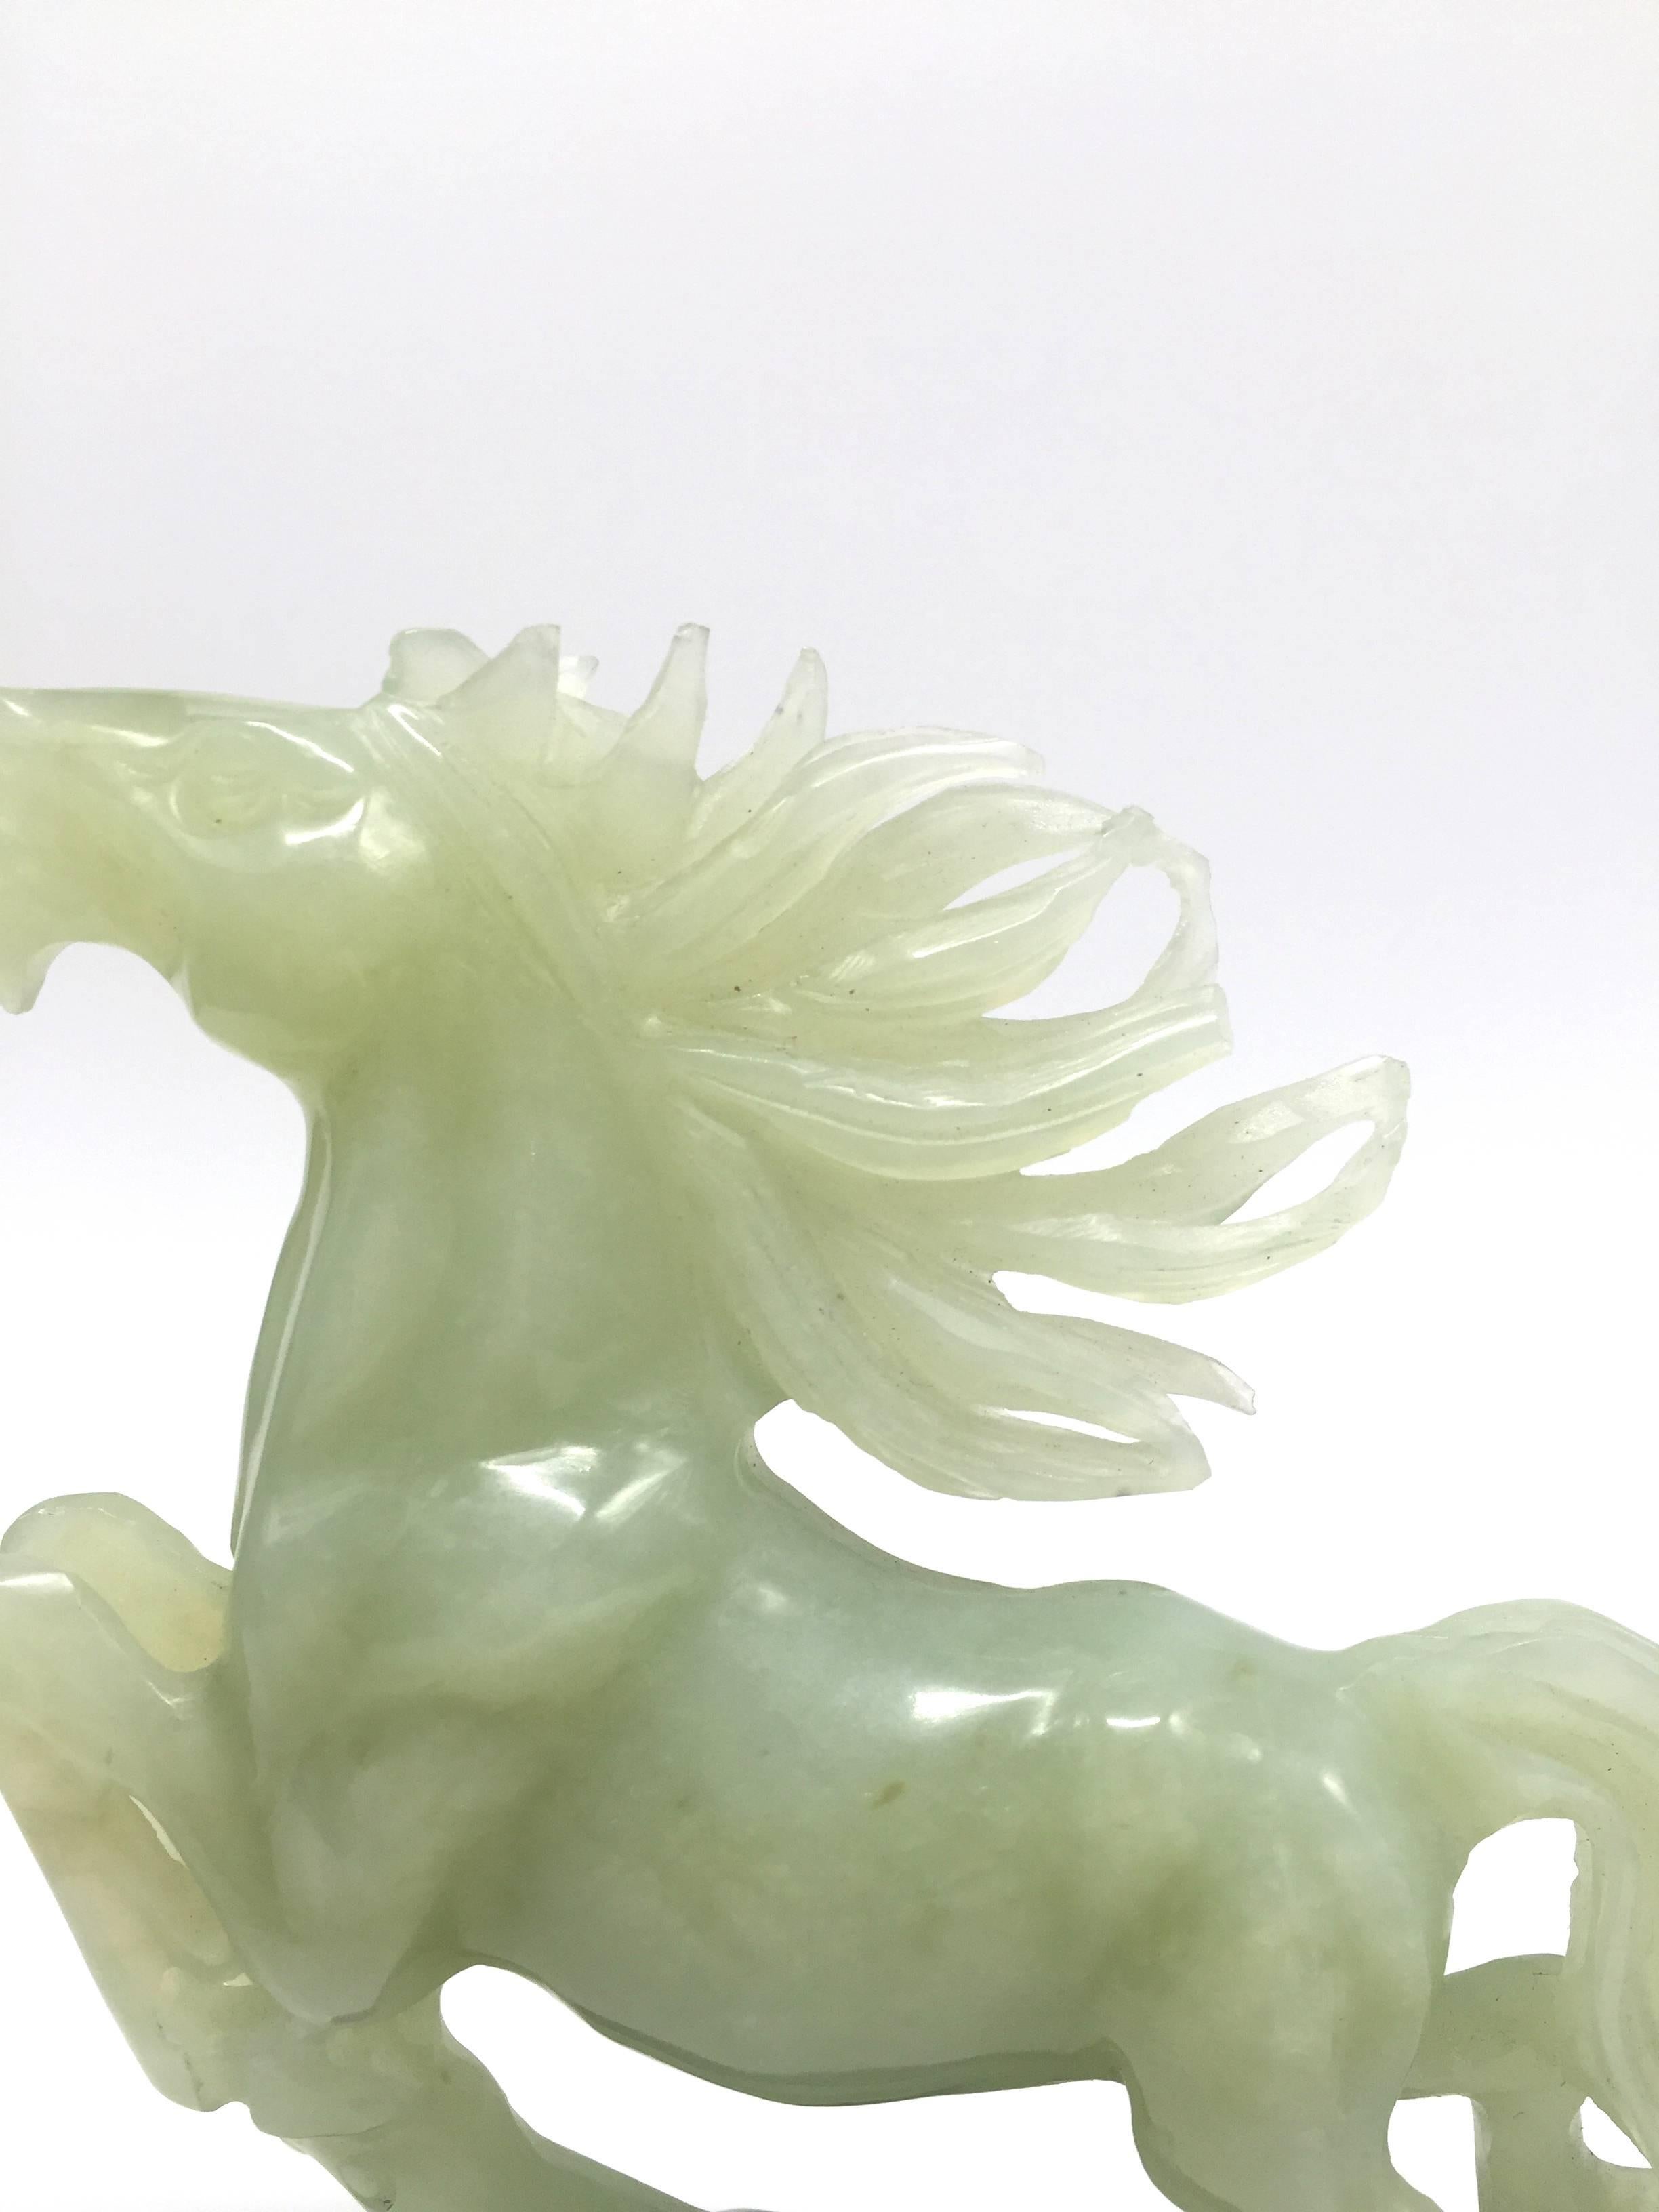 green jade horse statue